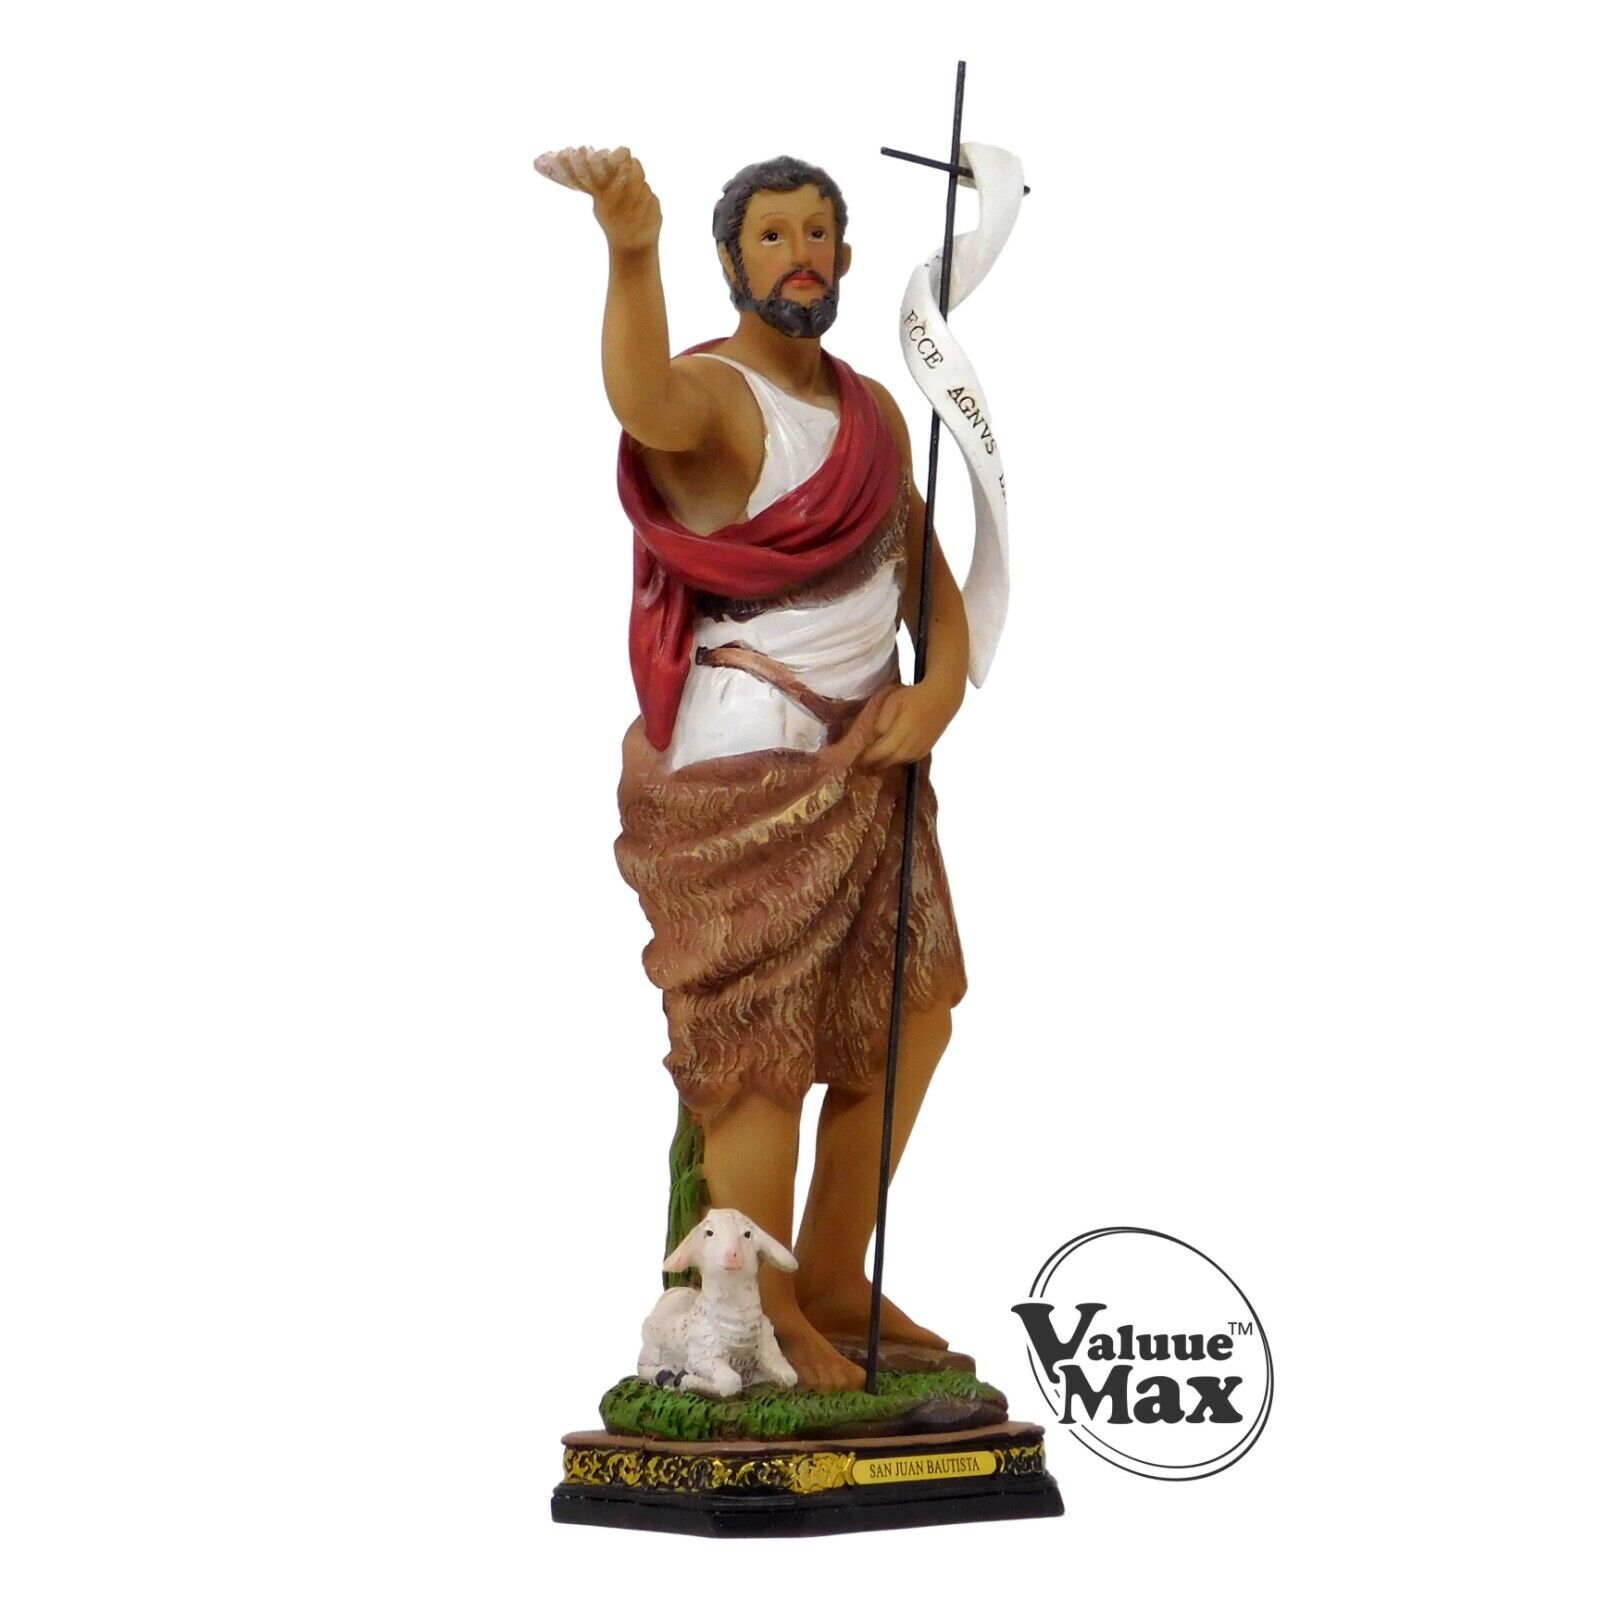 ValuueMax™ Saint John Baptist Statue Finely Detailed Resin 12 Inch Tall Figurine